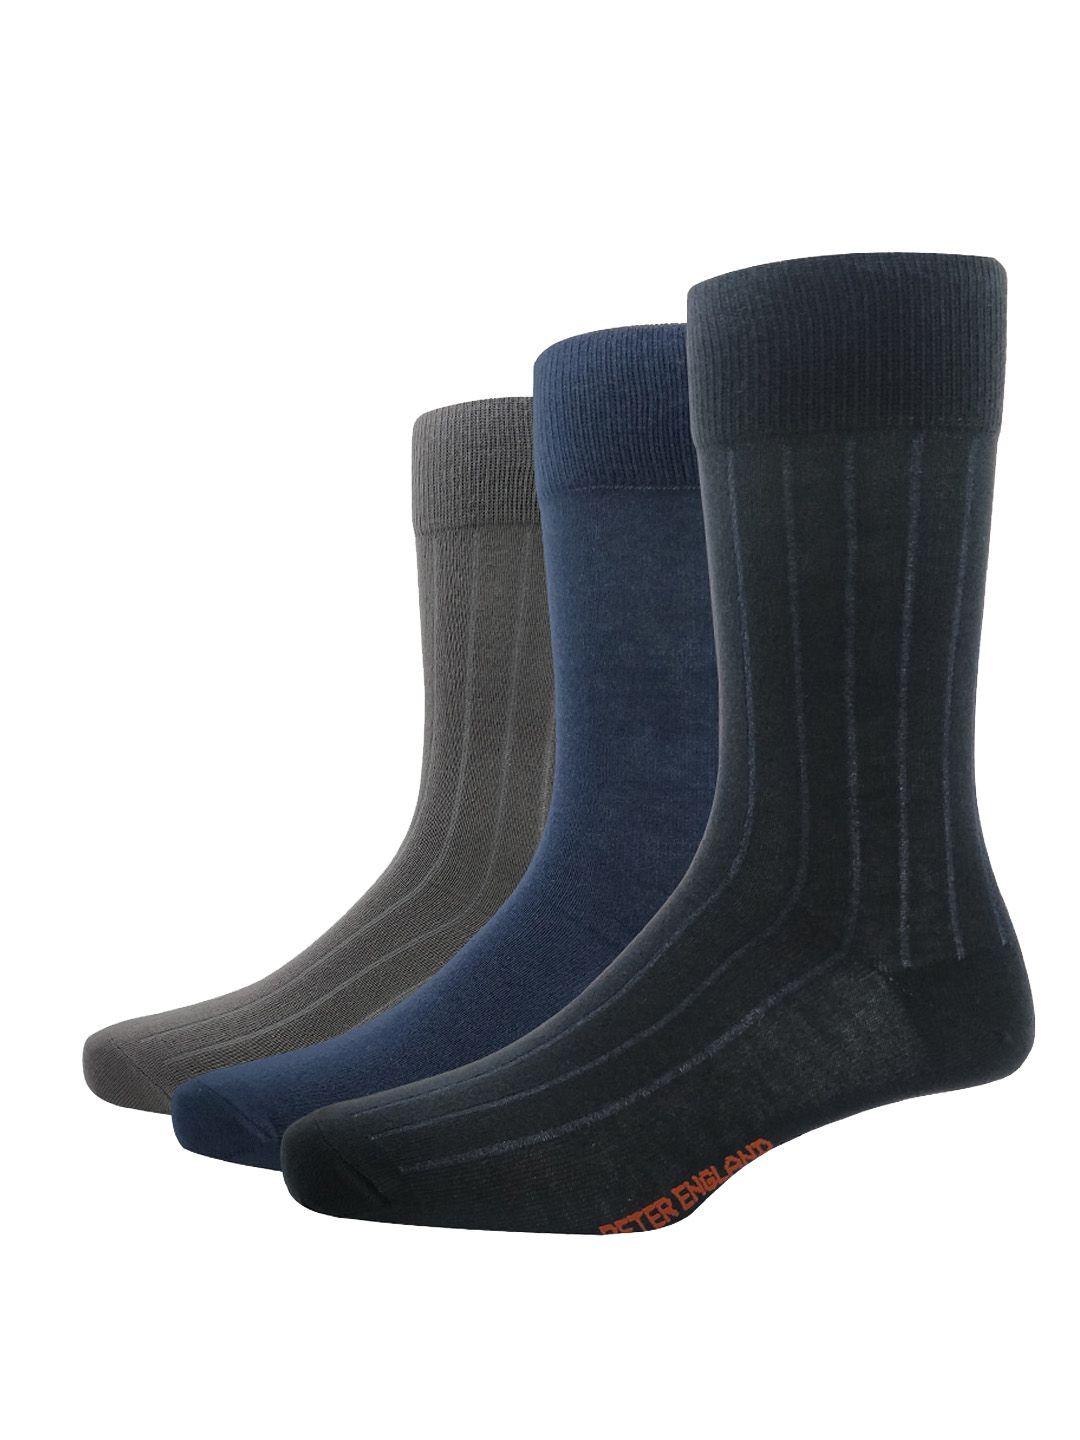 peter-england-men-set-of-3-multicoloured-patterned-calf-length-socks